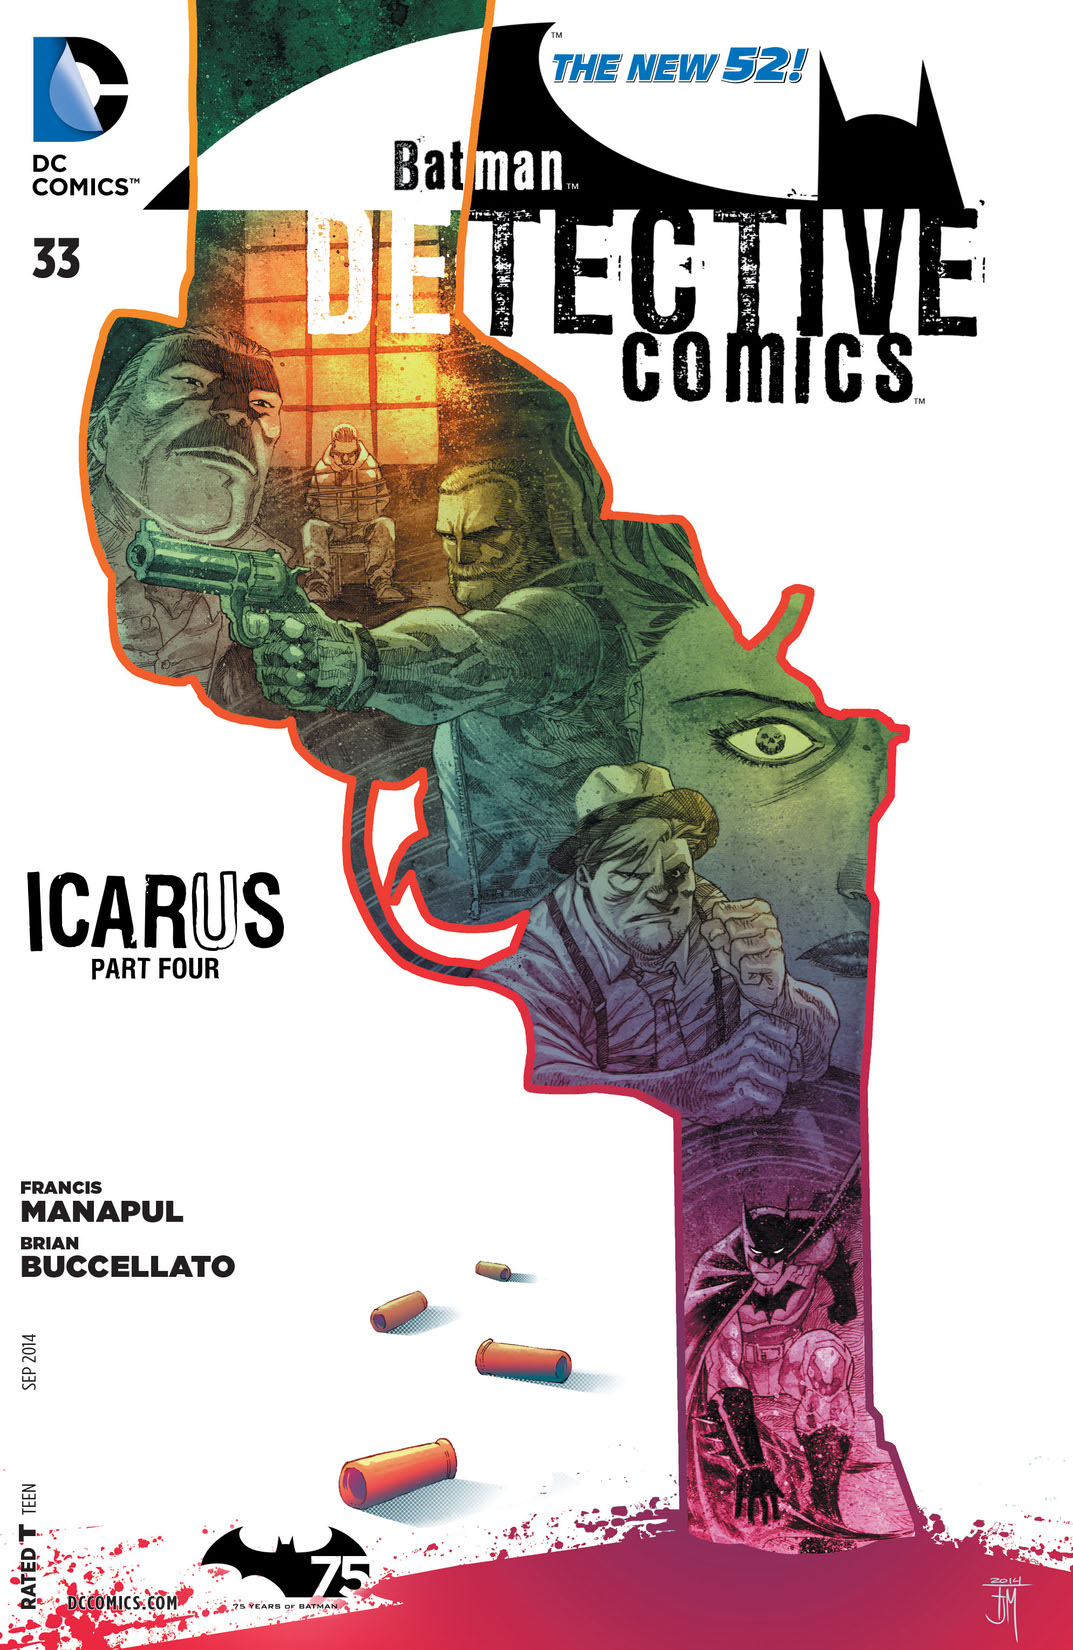 Detective Comics (2011-) #33 preview images